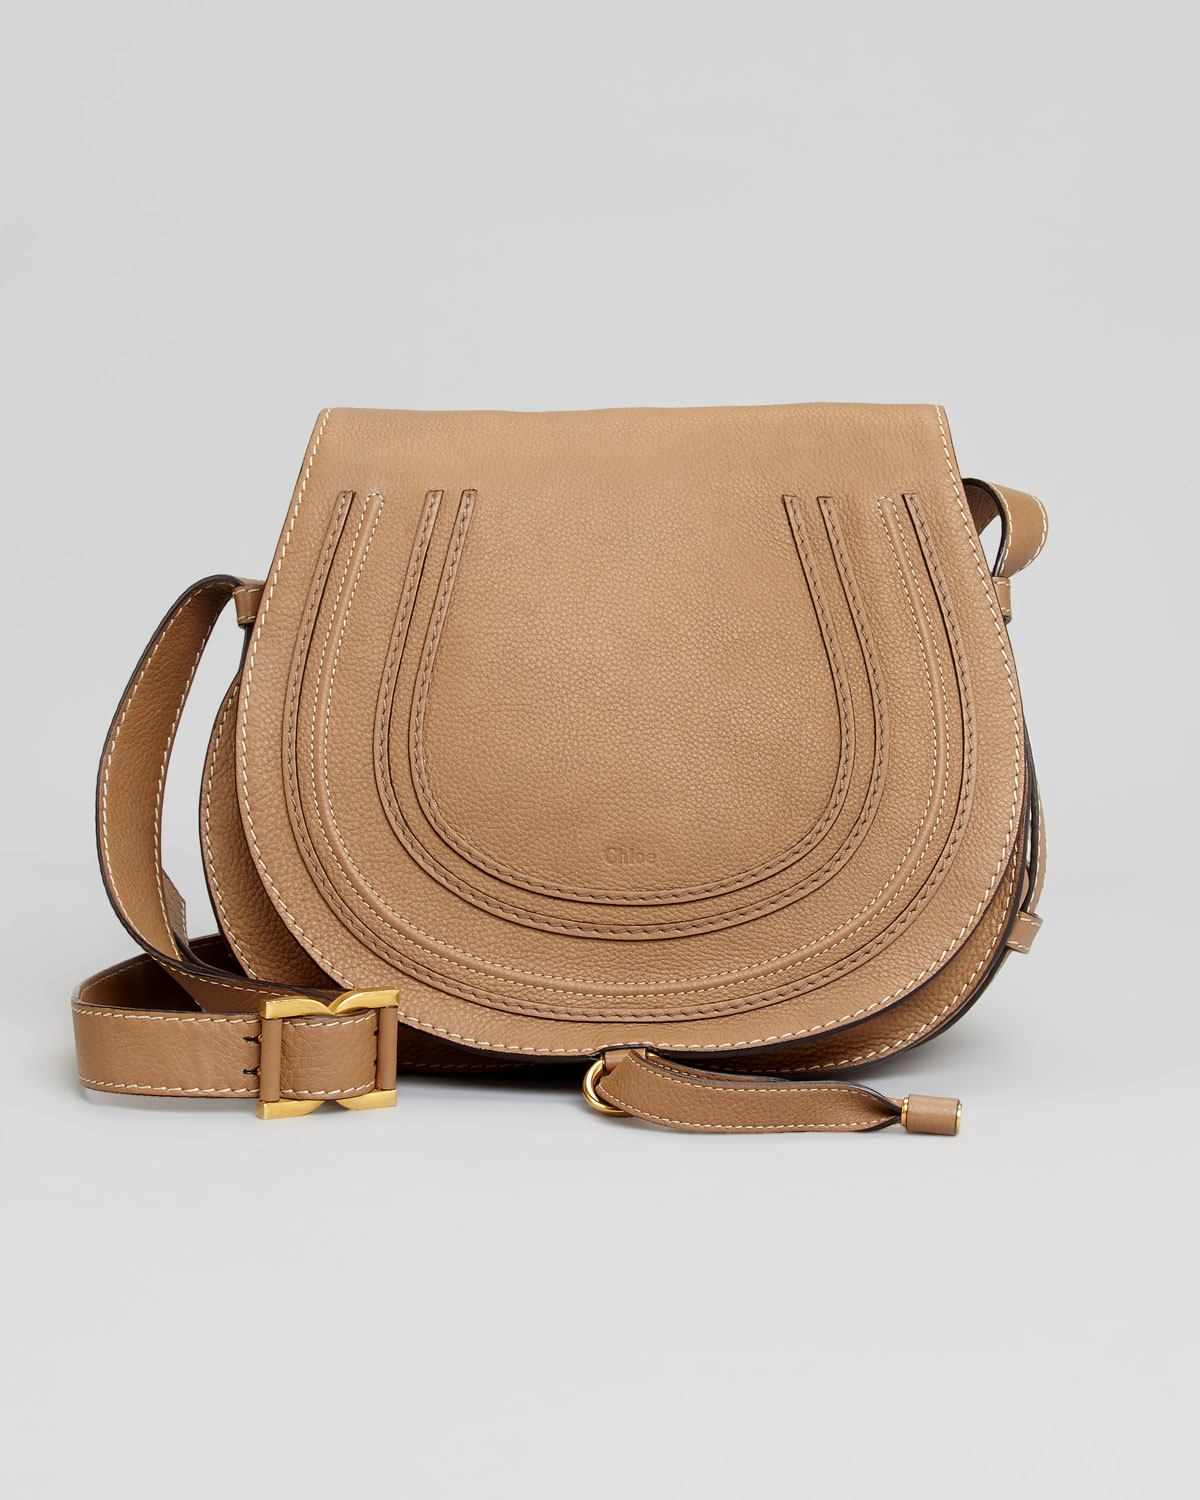 Chloé Marcie Crossbody Bag Leather | The Art of Mike Mignola